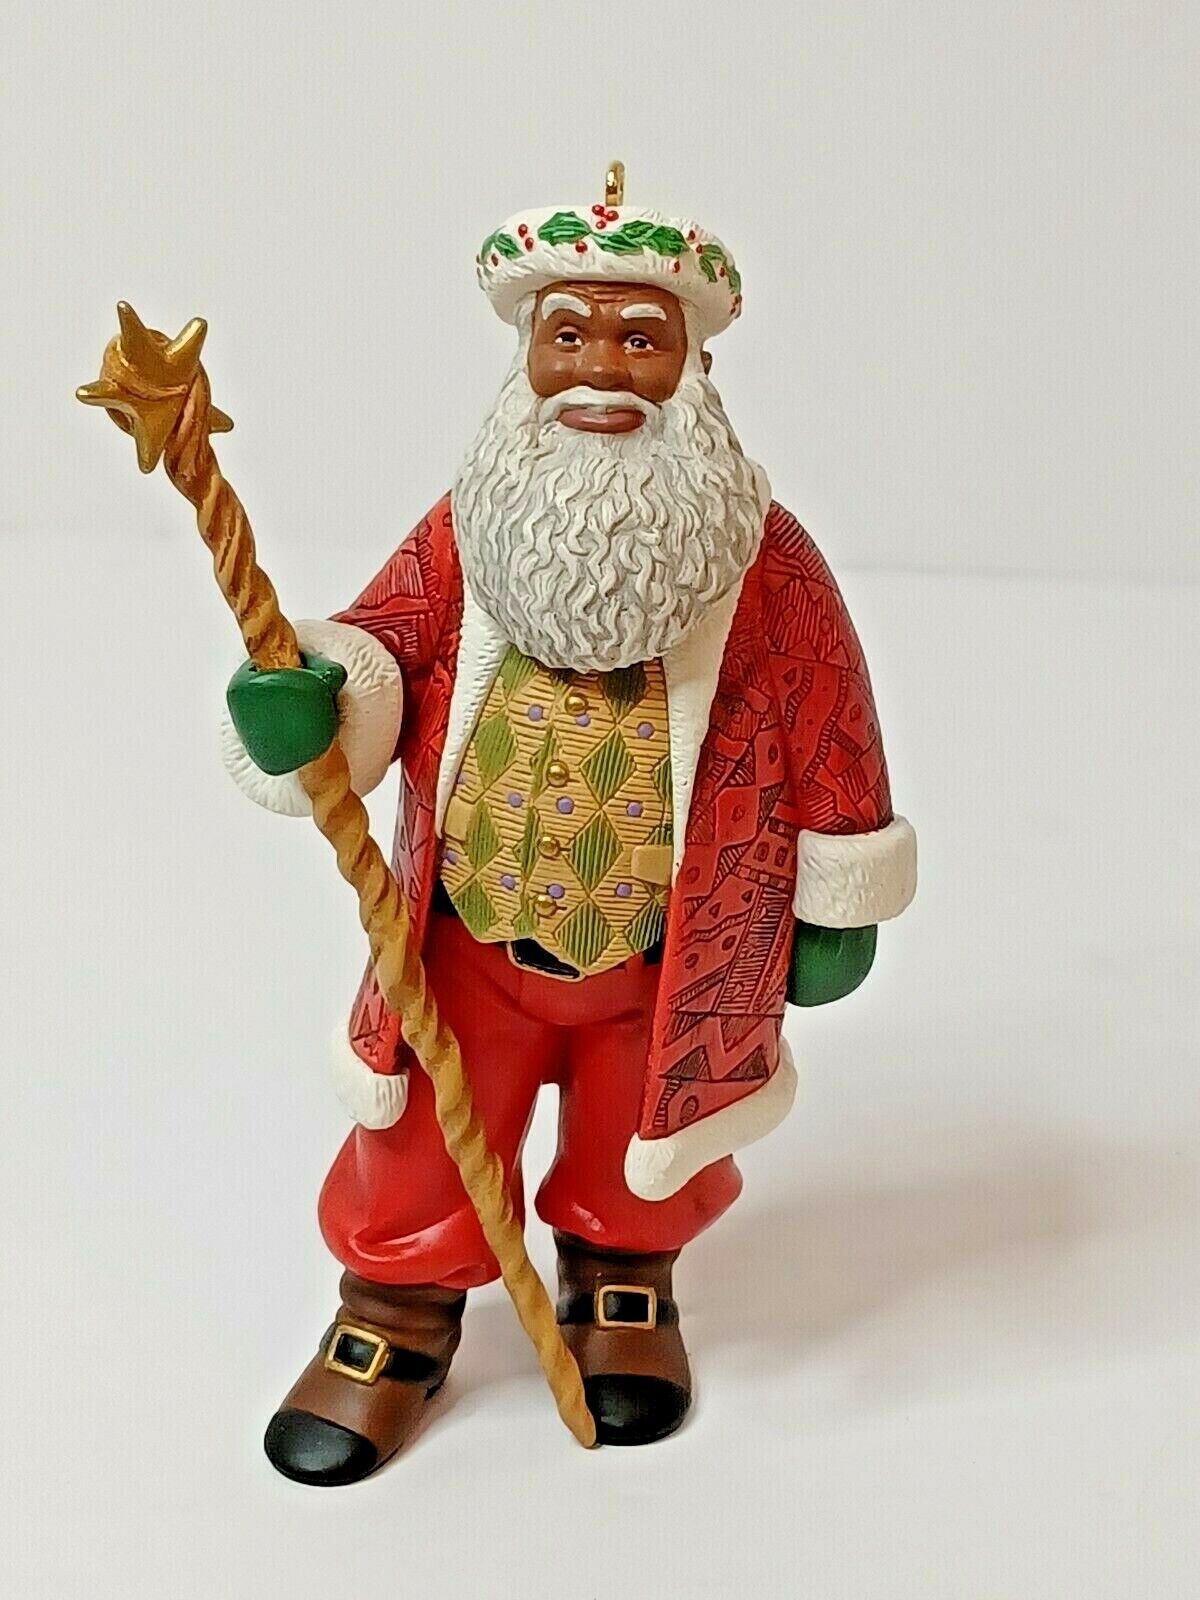 Hallmark Keepsake Ornament 1999 Joyful Santa #1 in series